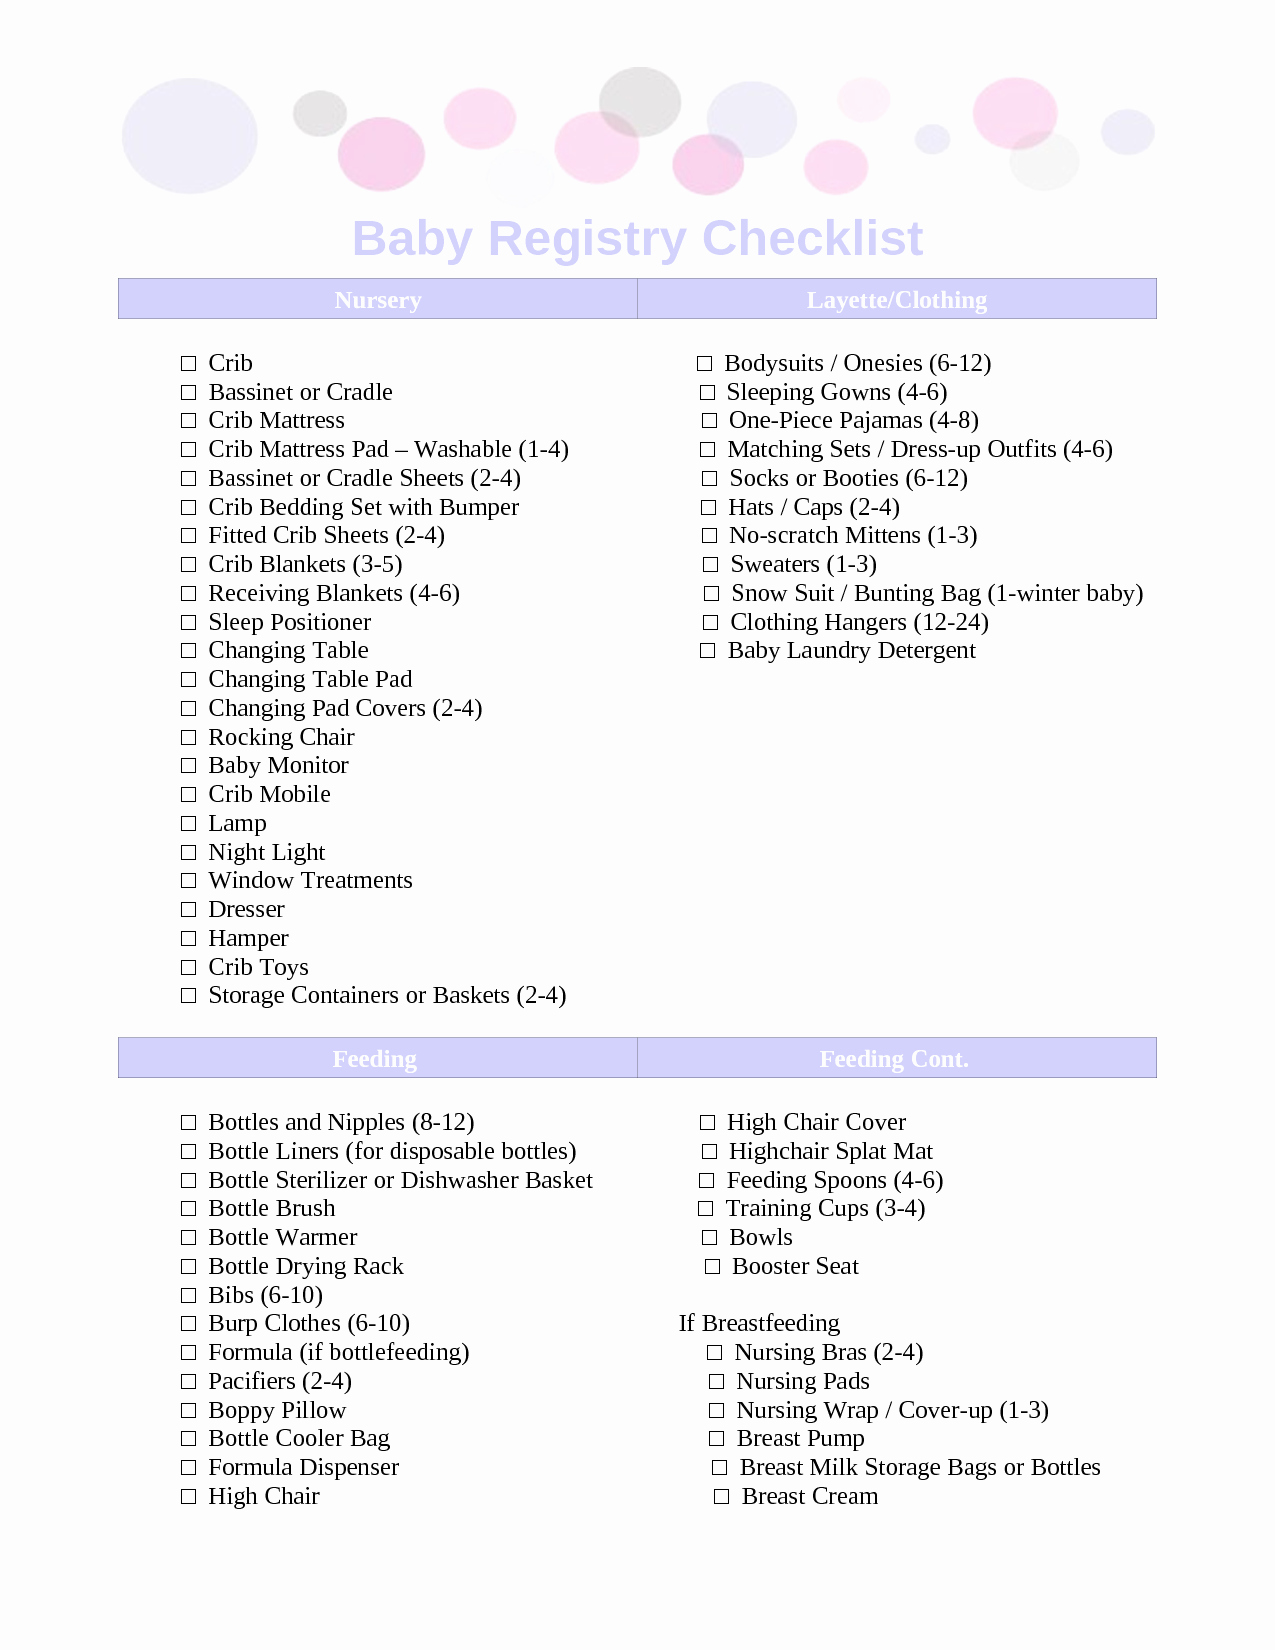 Baby Shower Shopping List Fresh Baby Shower Registry Checklist Image